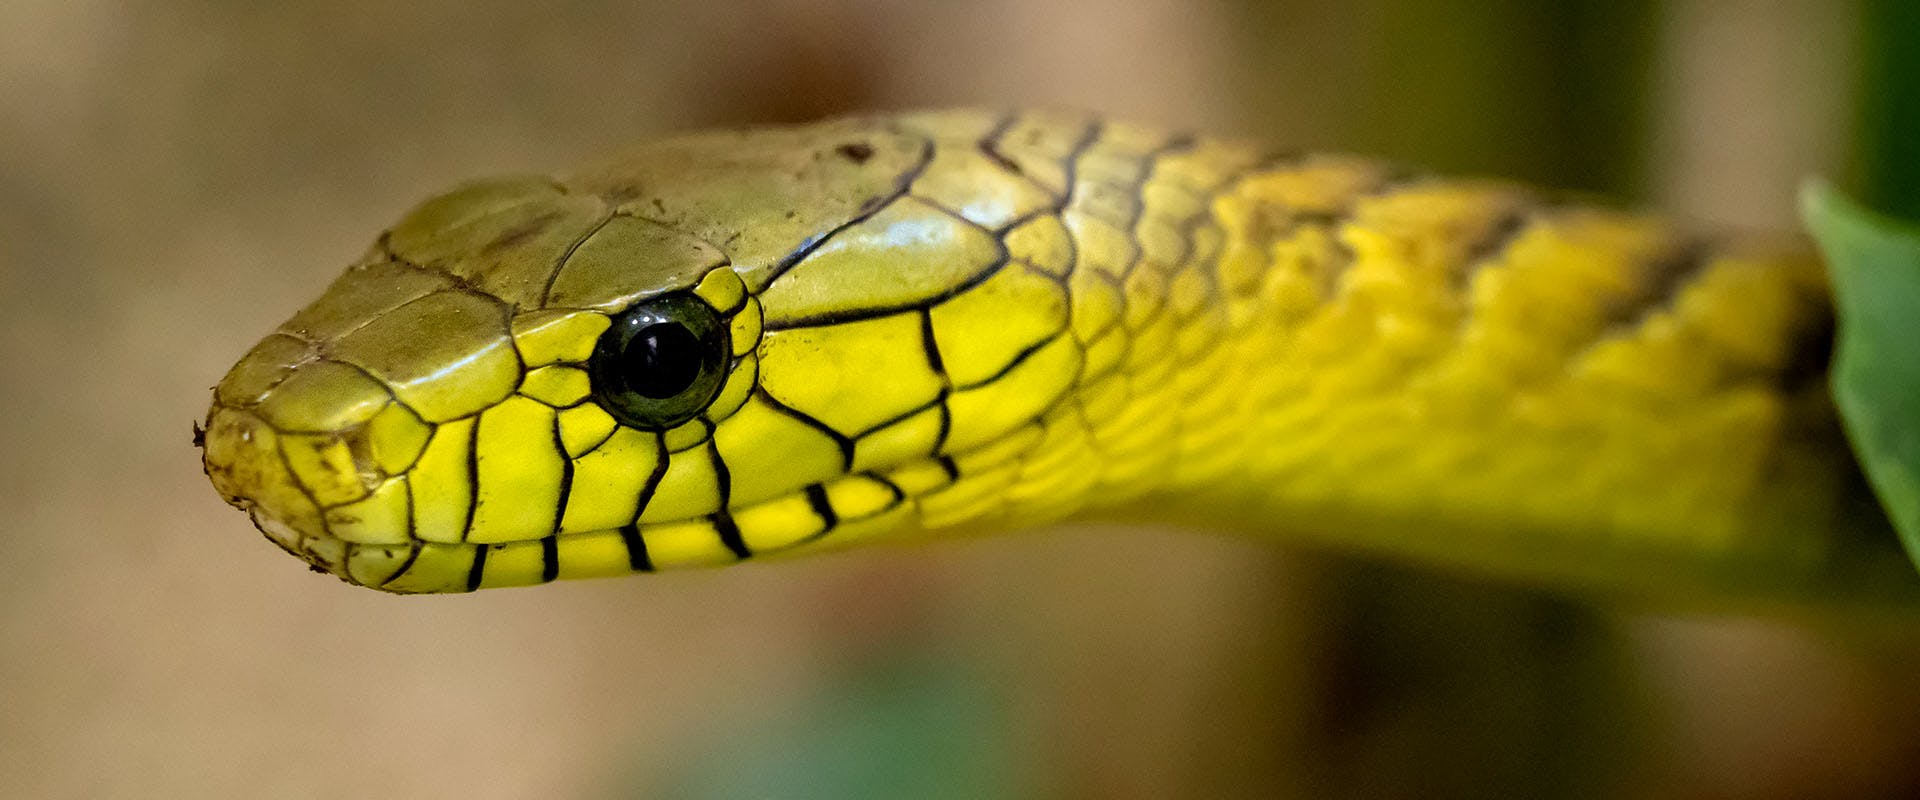 Snake Farm Sri Lanka Ahangama Weligama